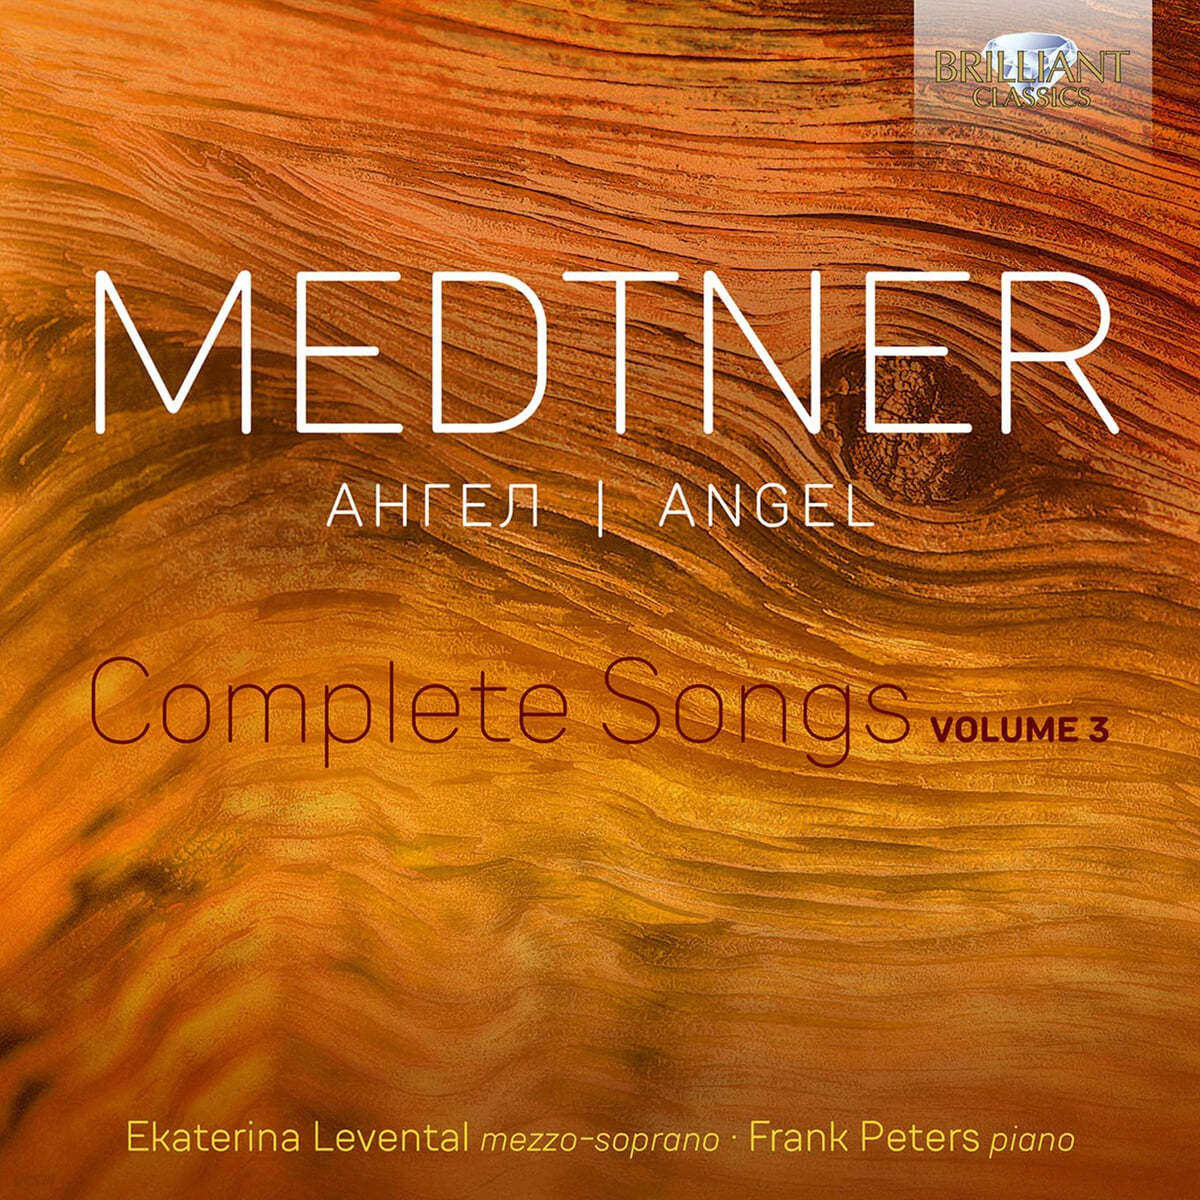 Ekaterina Levental 니콜라이 메트너: 가곡 전곡, 3집 (Nikolai Medtner: Complete Songs, Vol. 3 - Angel)